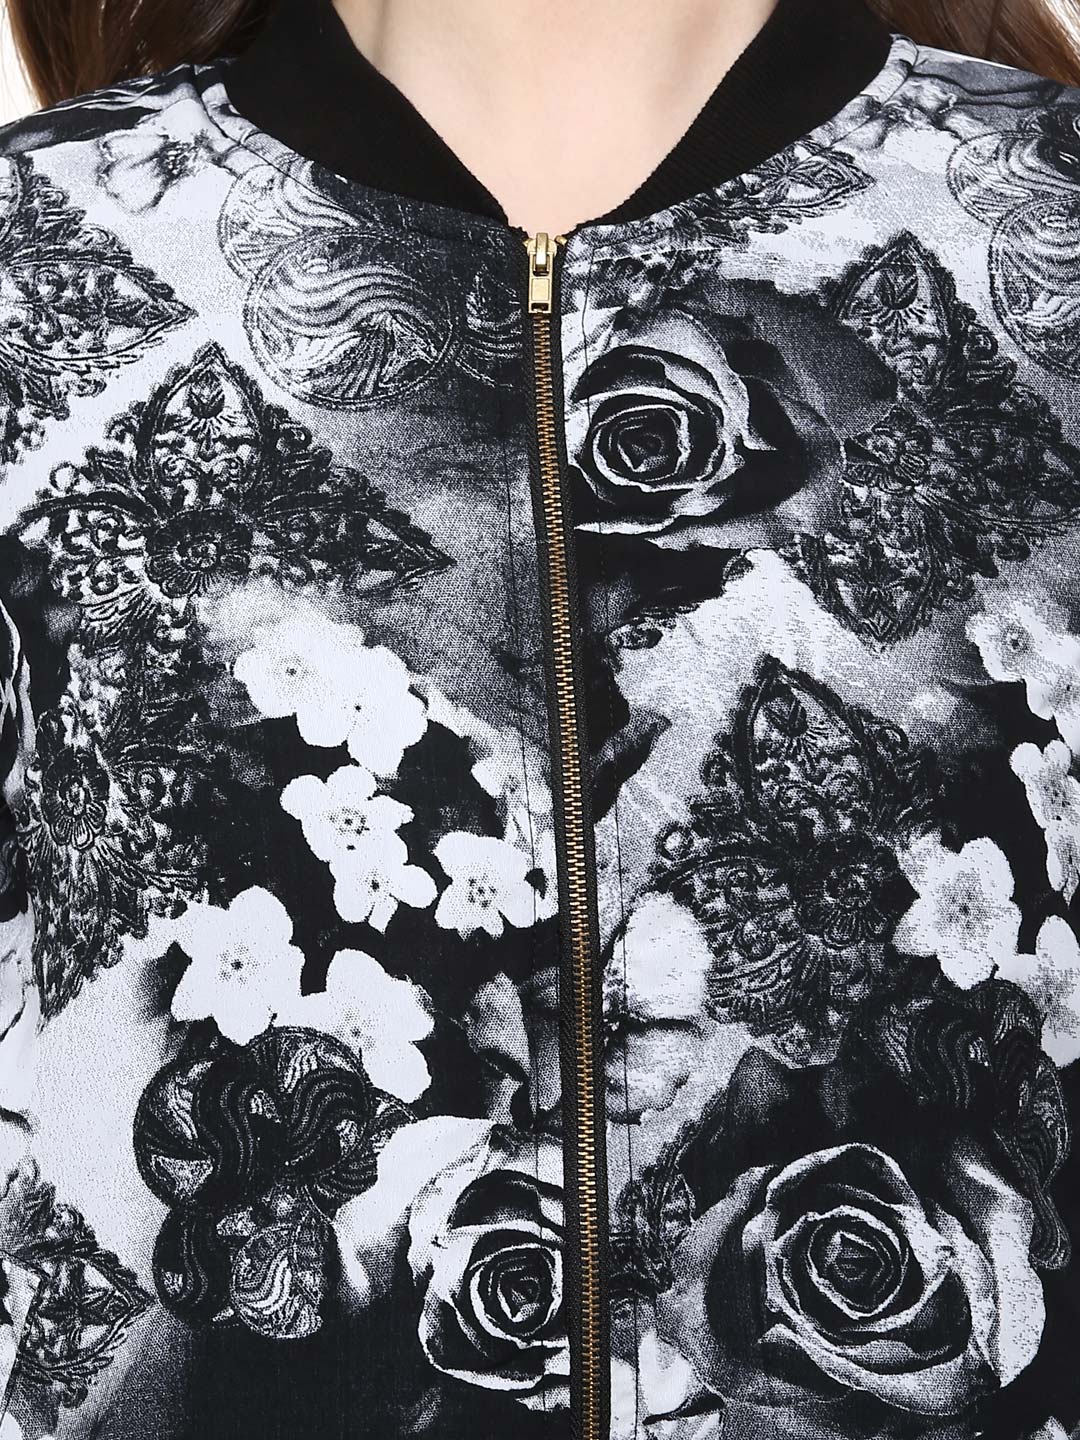 Women's  Black Floral Print Bomber Jacket - StyleStone